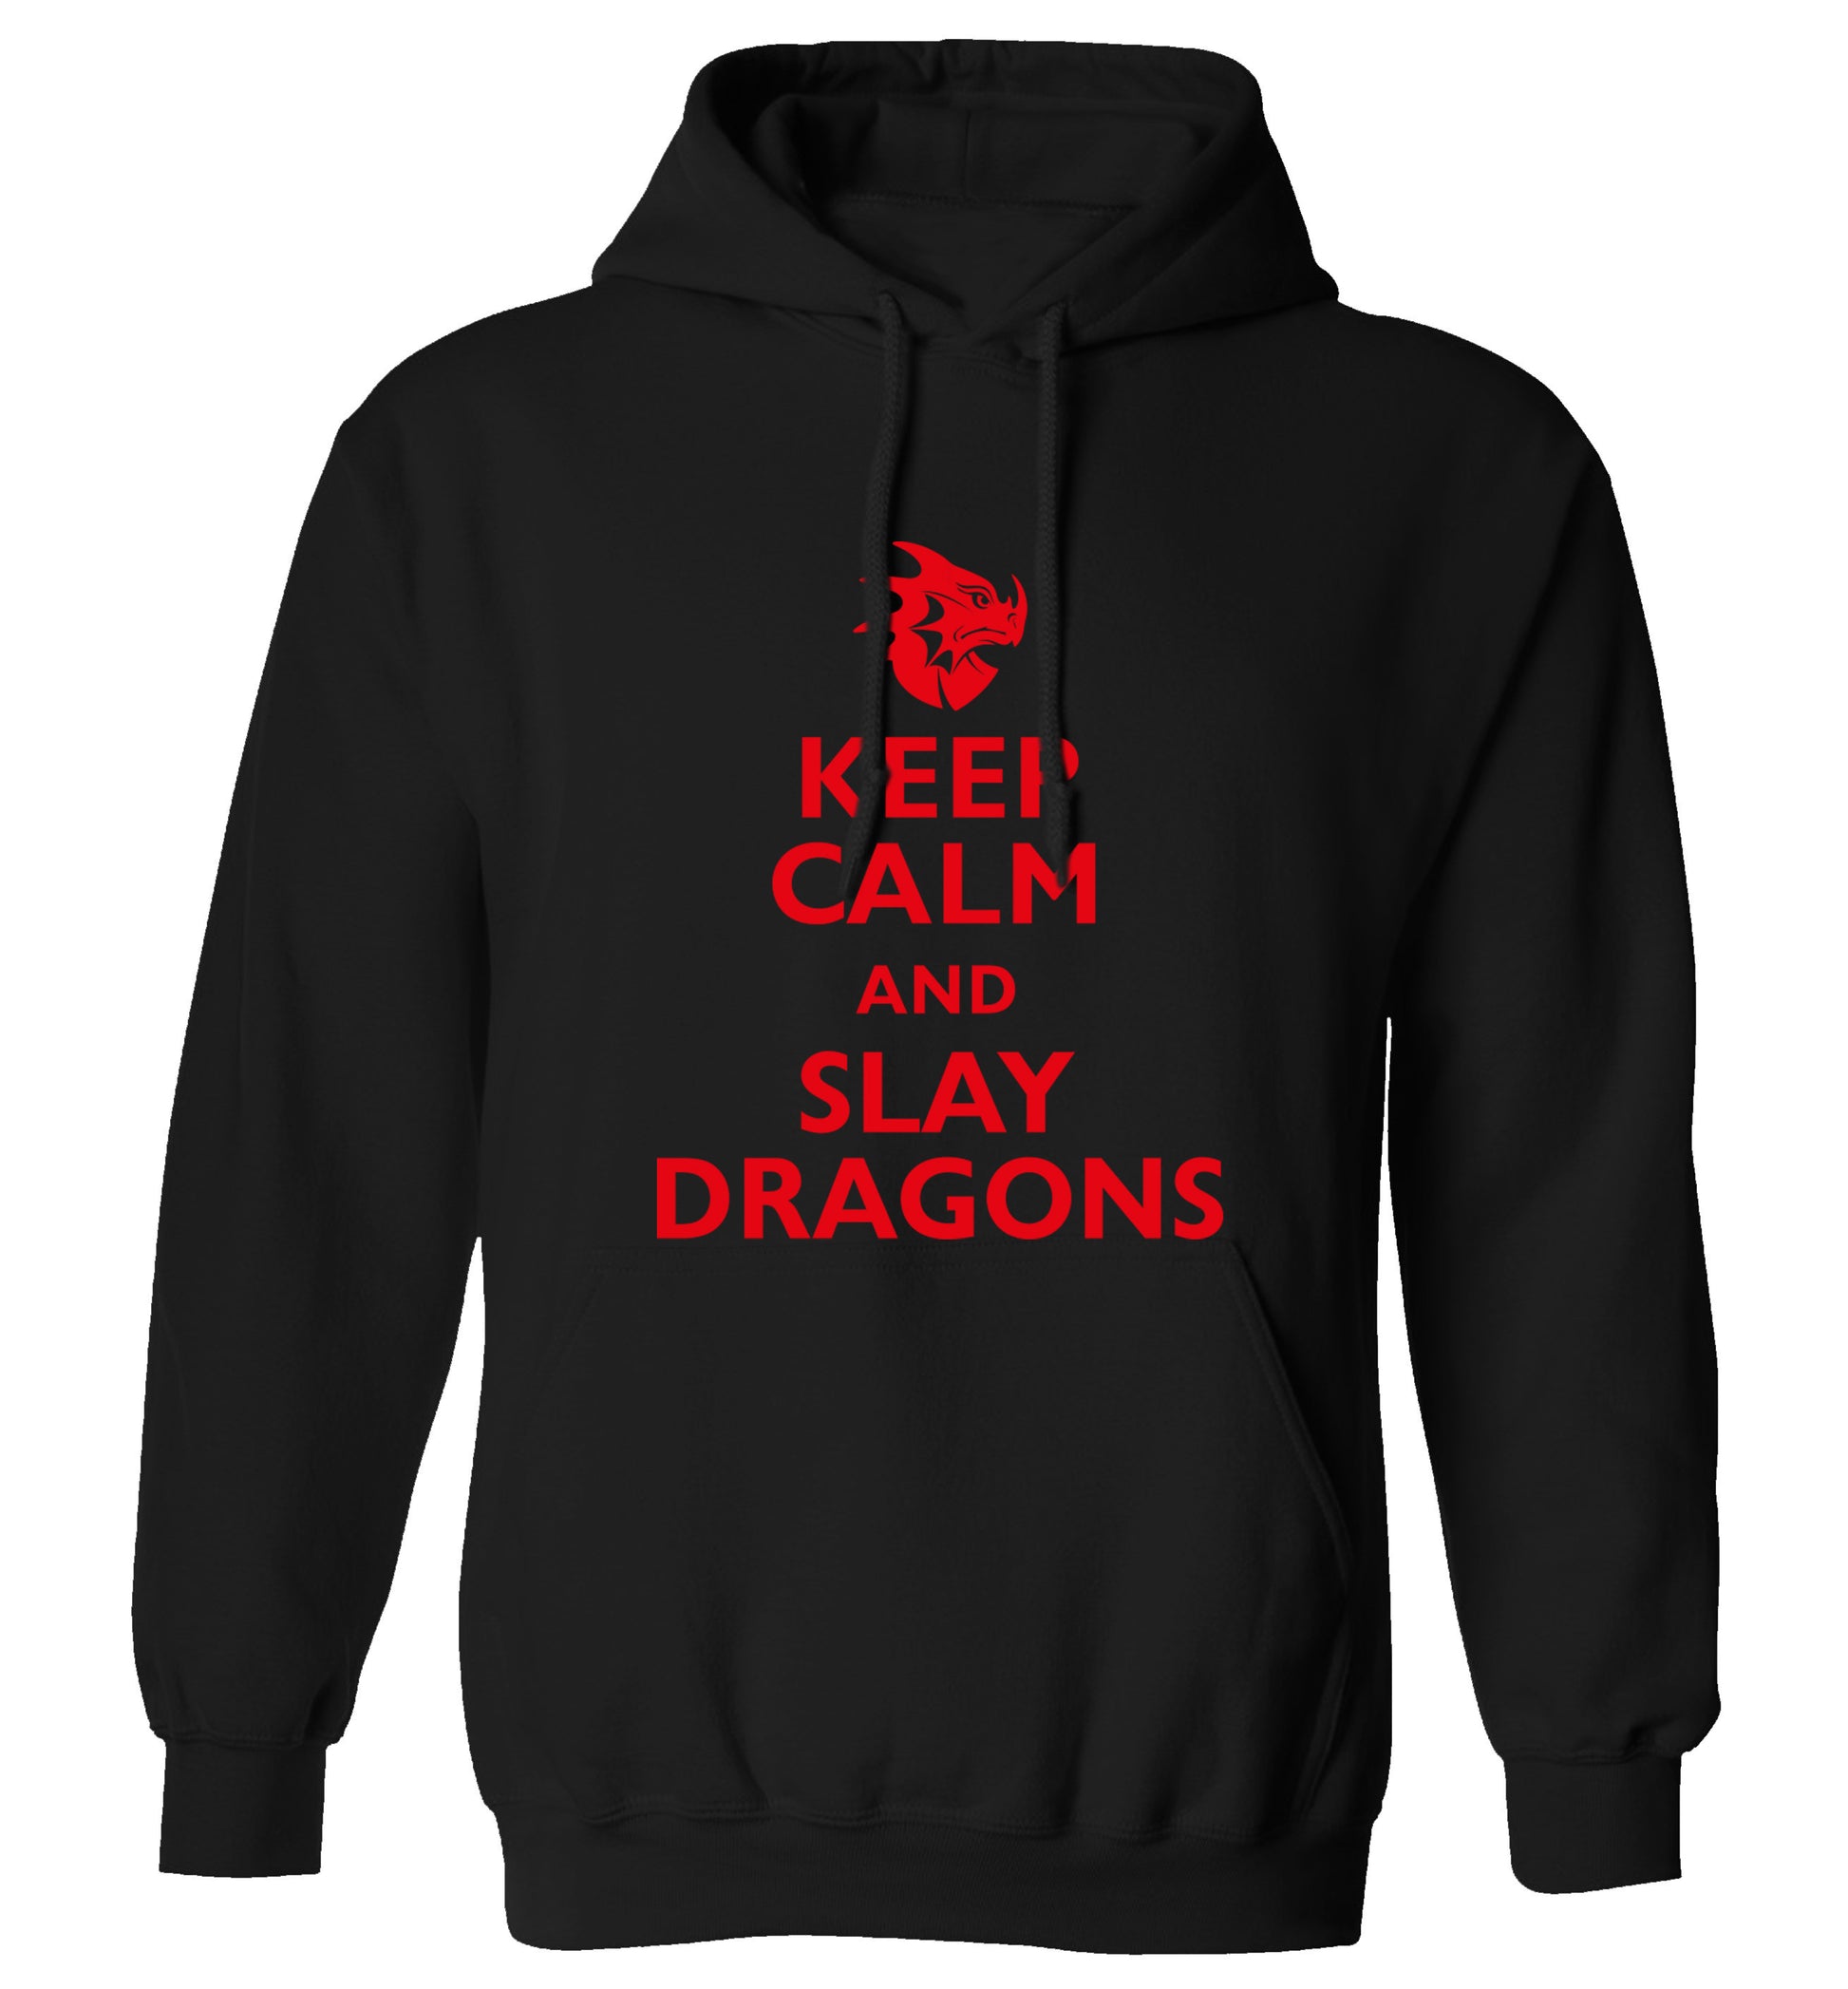 Keep calm and slay dragons adults unisex black hoodie 2XL